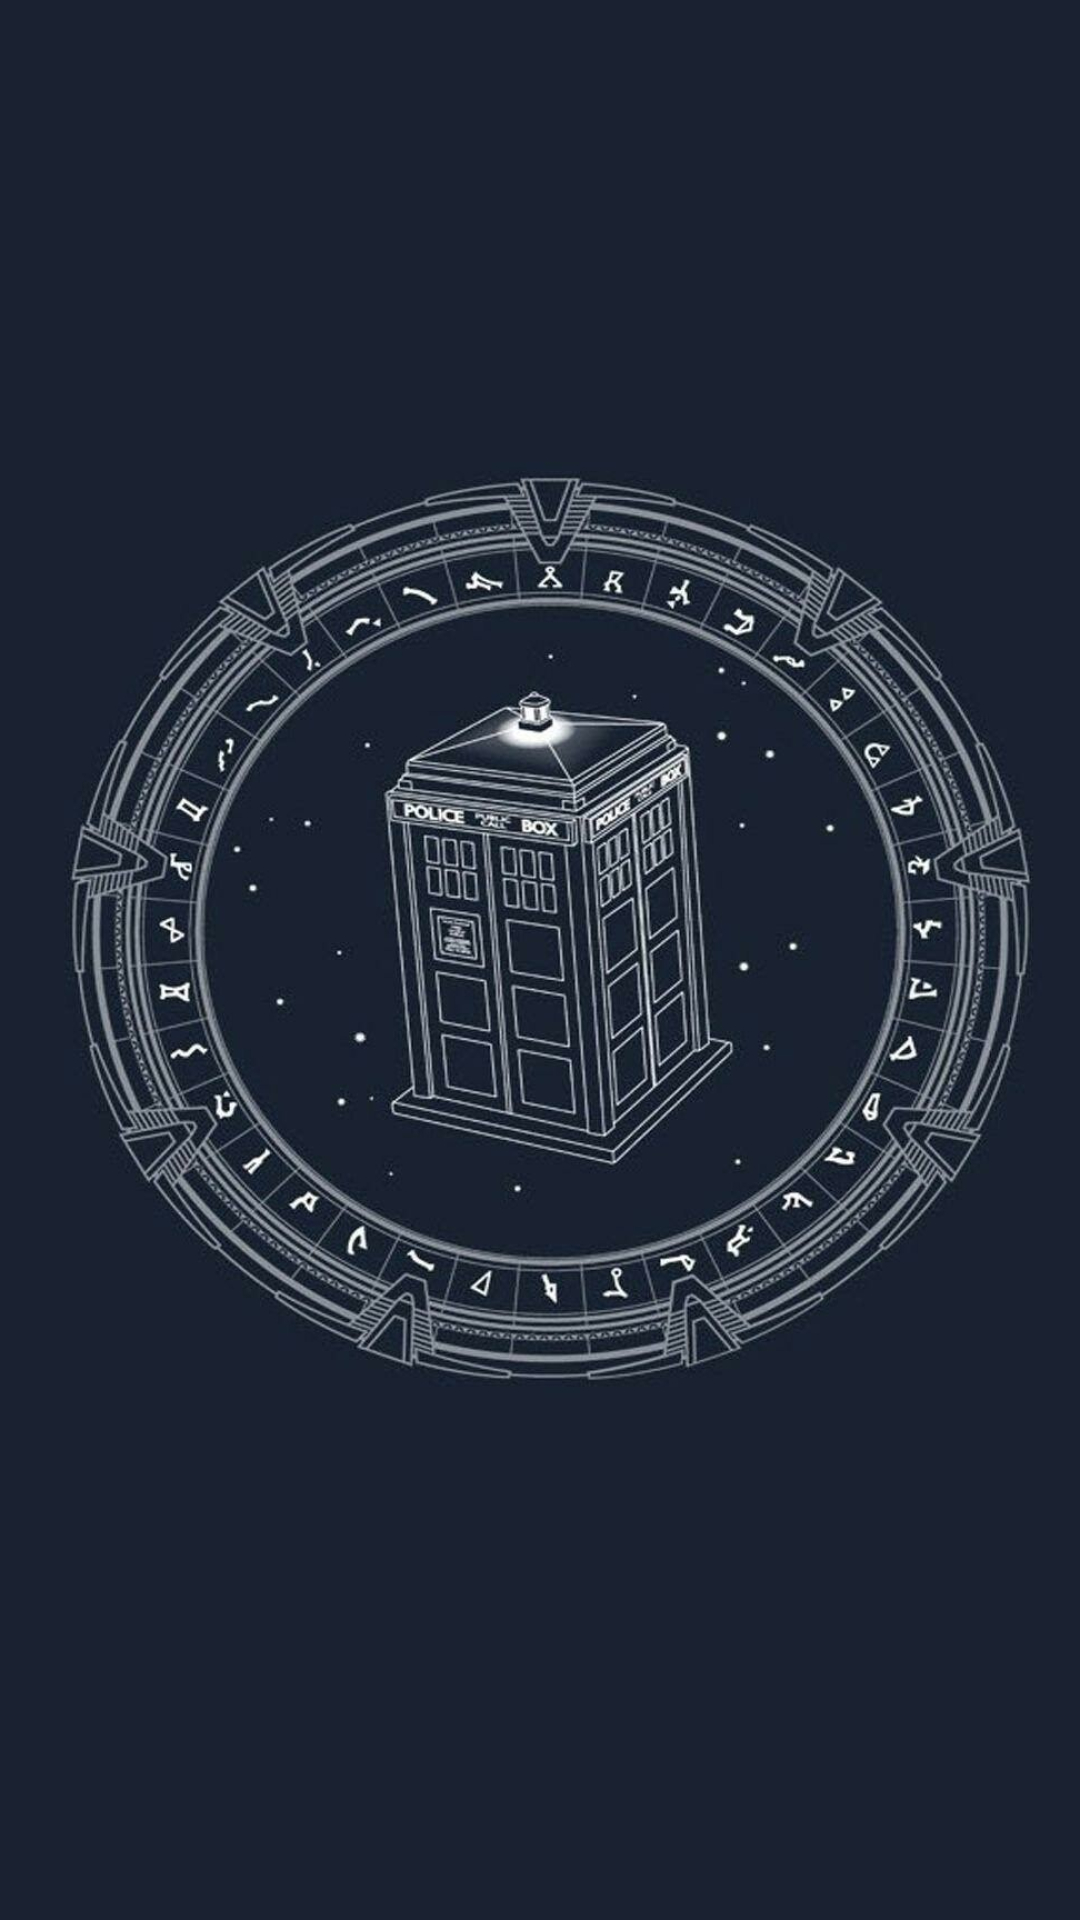 Doctor Who: The TARDIS console room, Art, TT capsule. 1080x1920 Full HD Wallpaper.